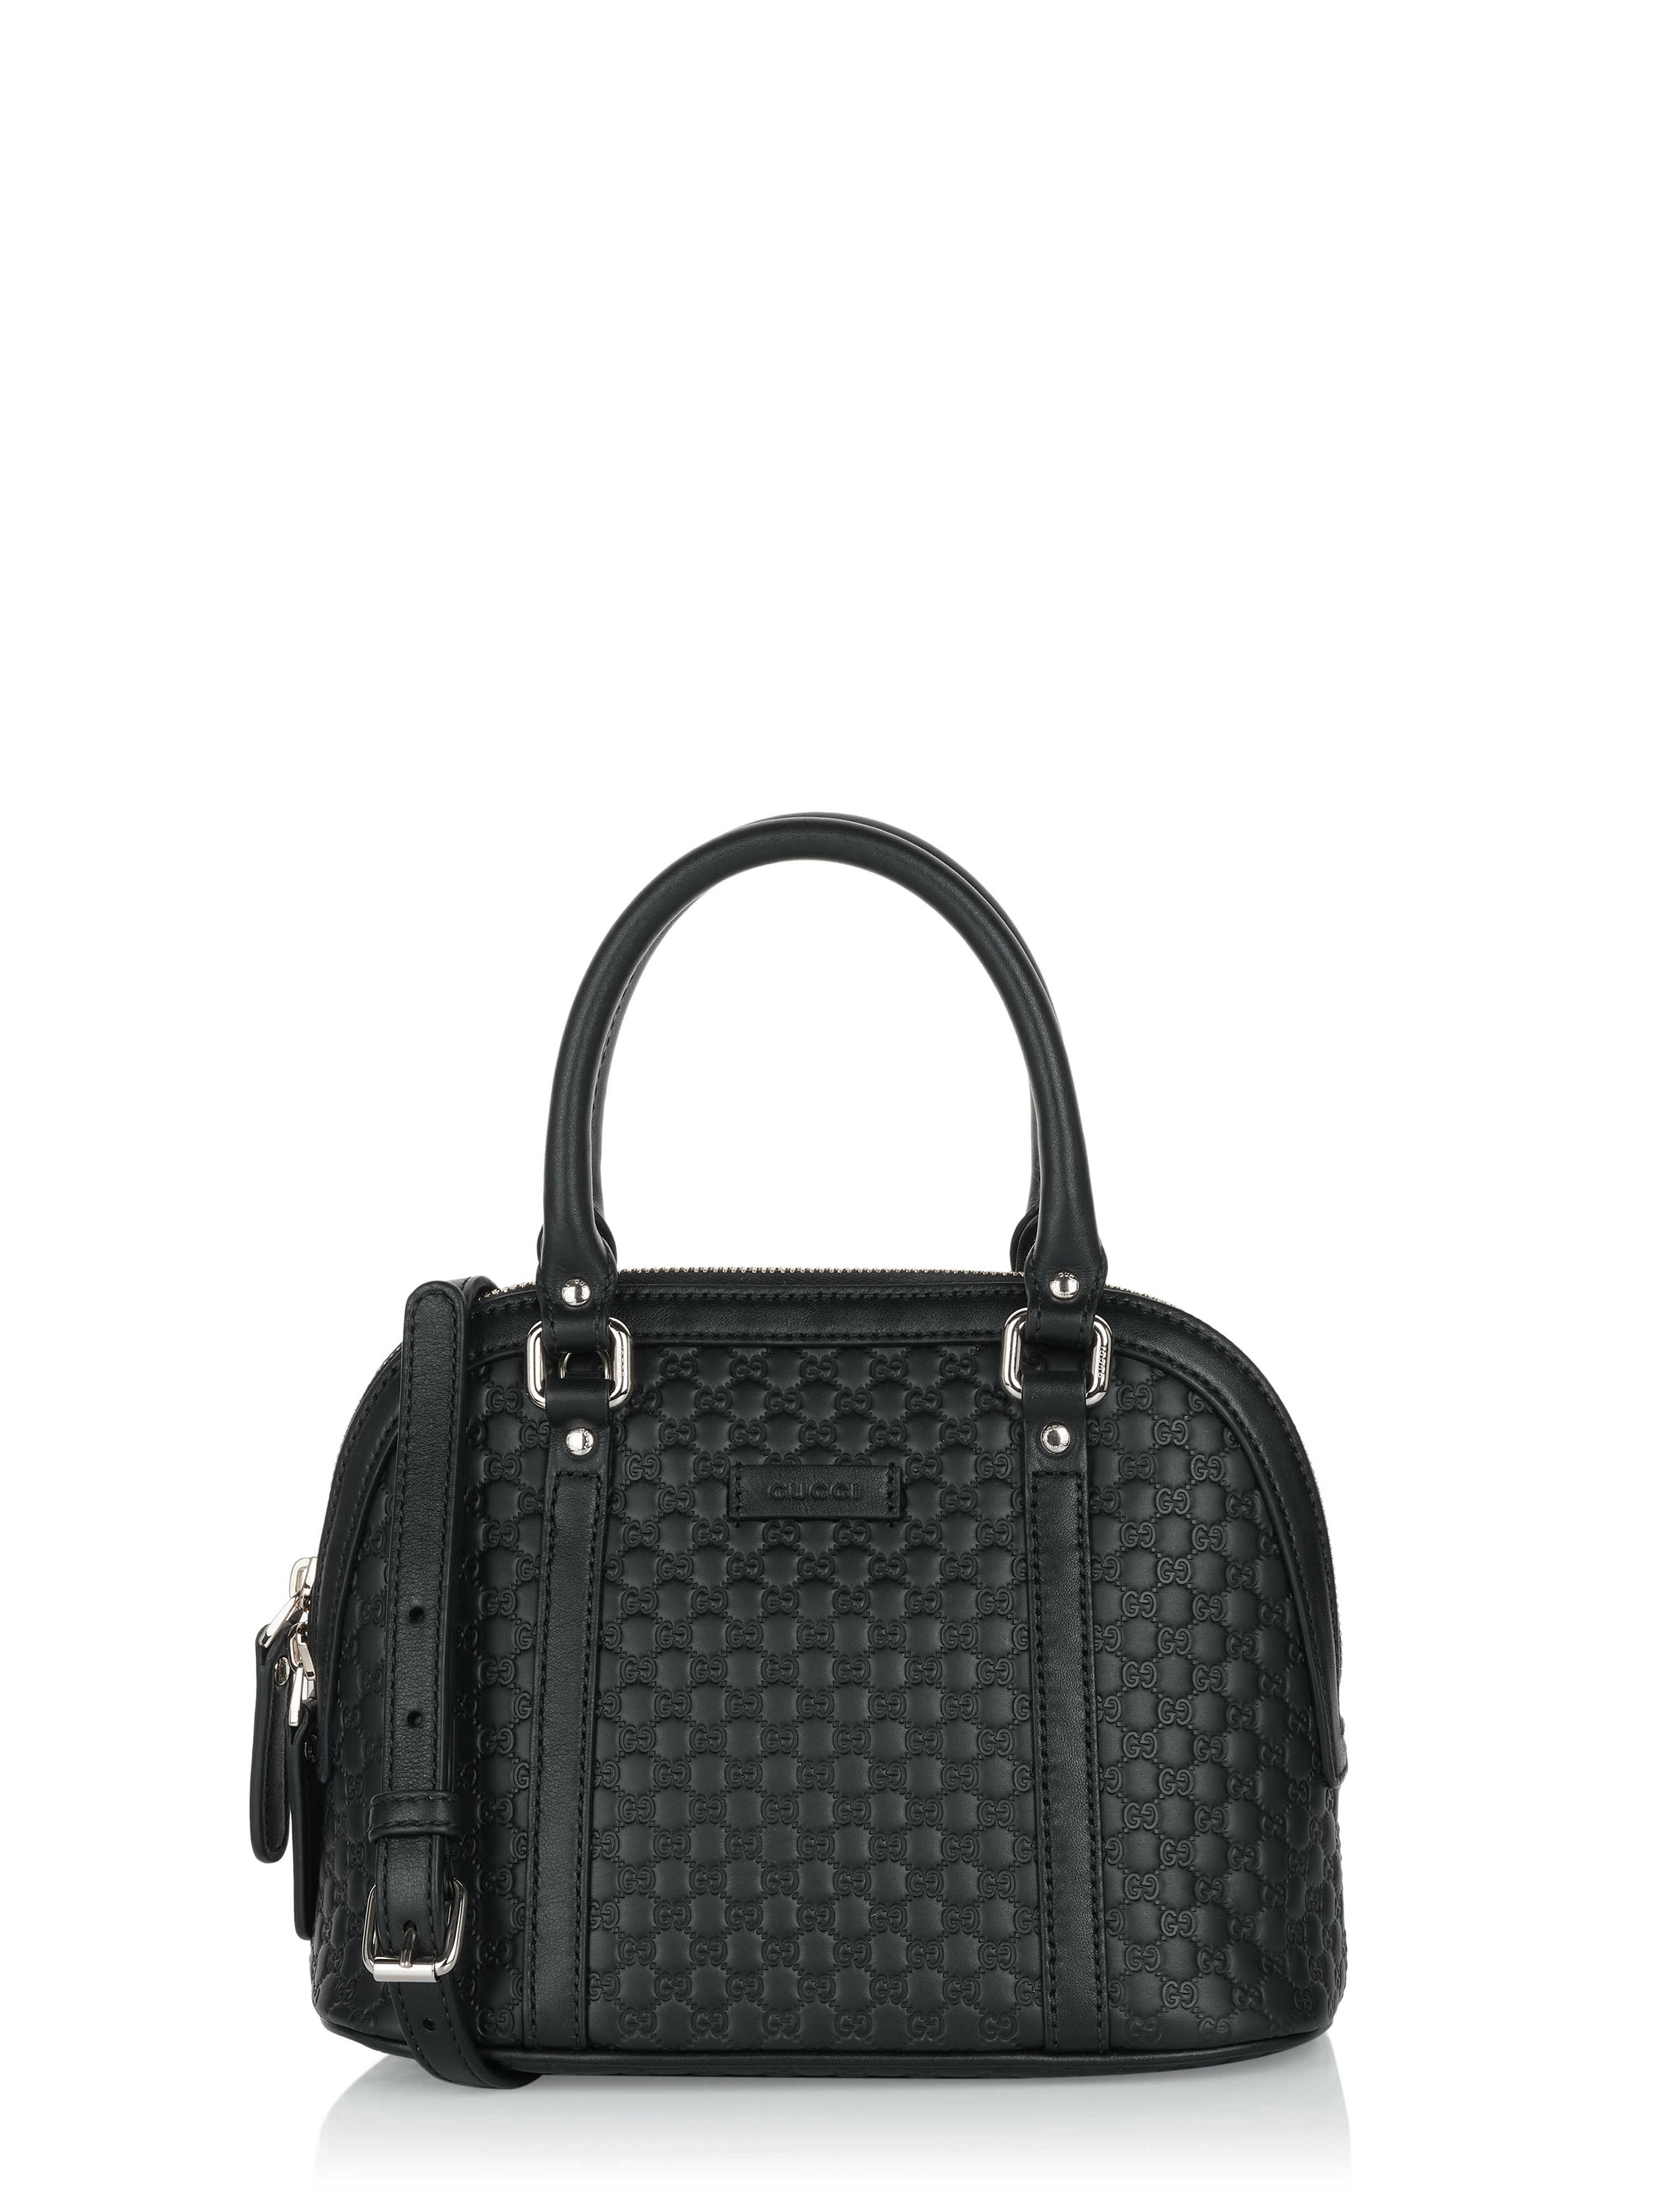 Pin by Nah Nah on Bolsas | Black gucci purse, Gucci, Vintage gucci purse